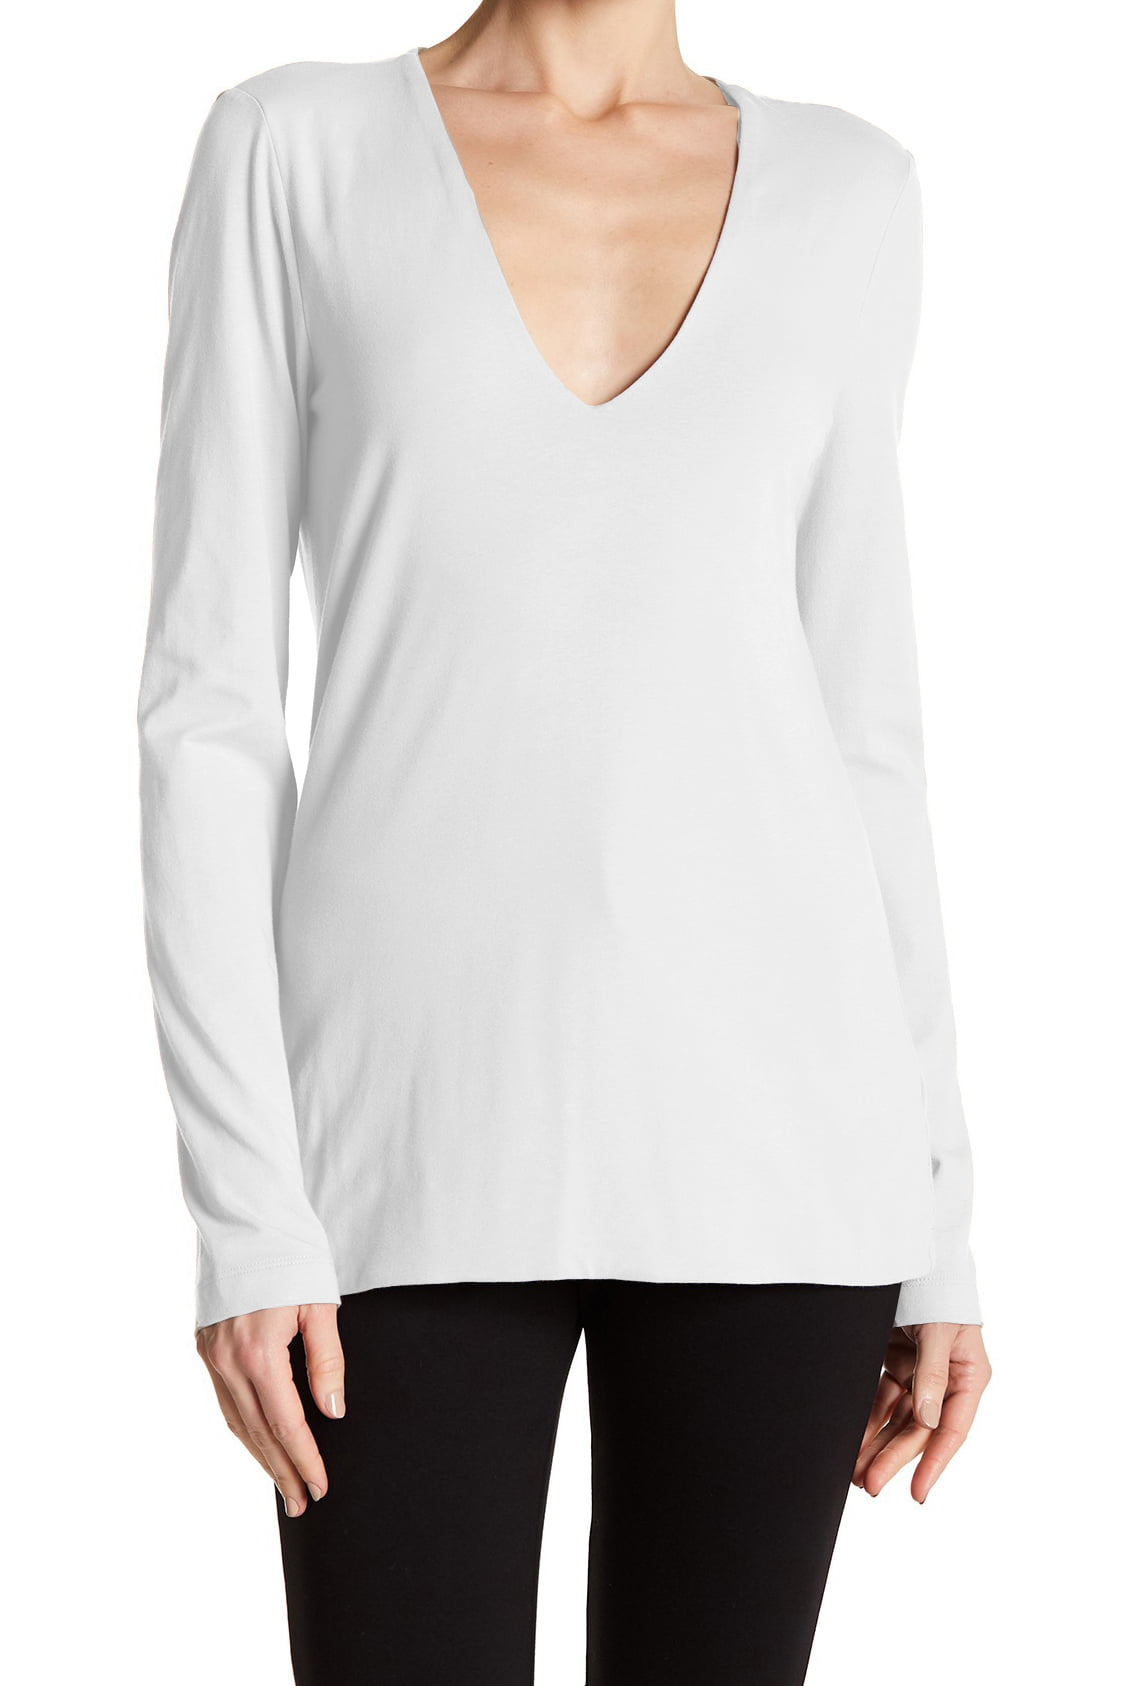 Buedvo Women Casual Solid O-Neck Pockets Long Sleeve Lin Top T-Shirt Blouse 